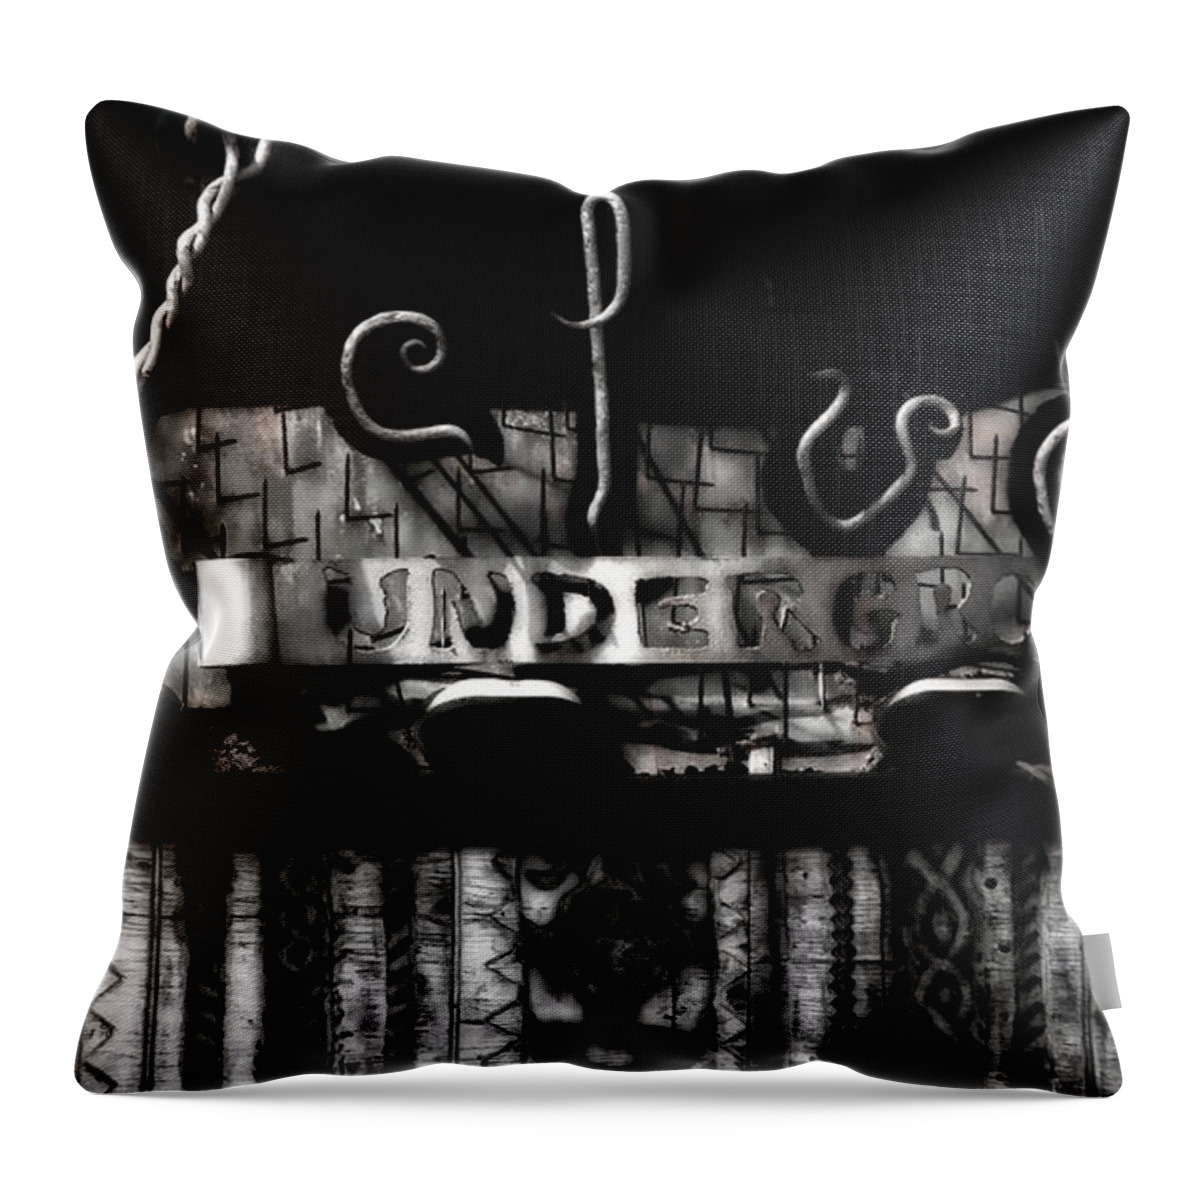 Velvet Underground Throw Pillow featuring the photograph Velvet Underground by Andrea Kollo